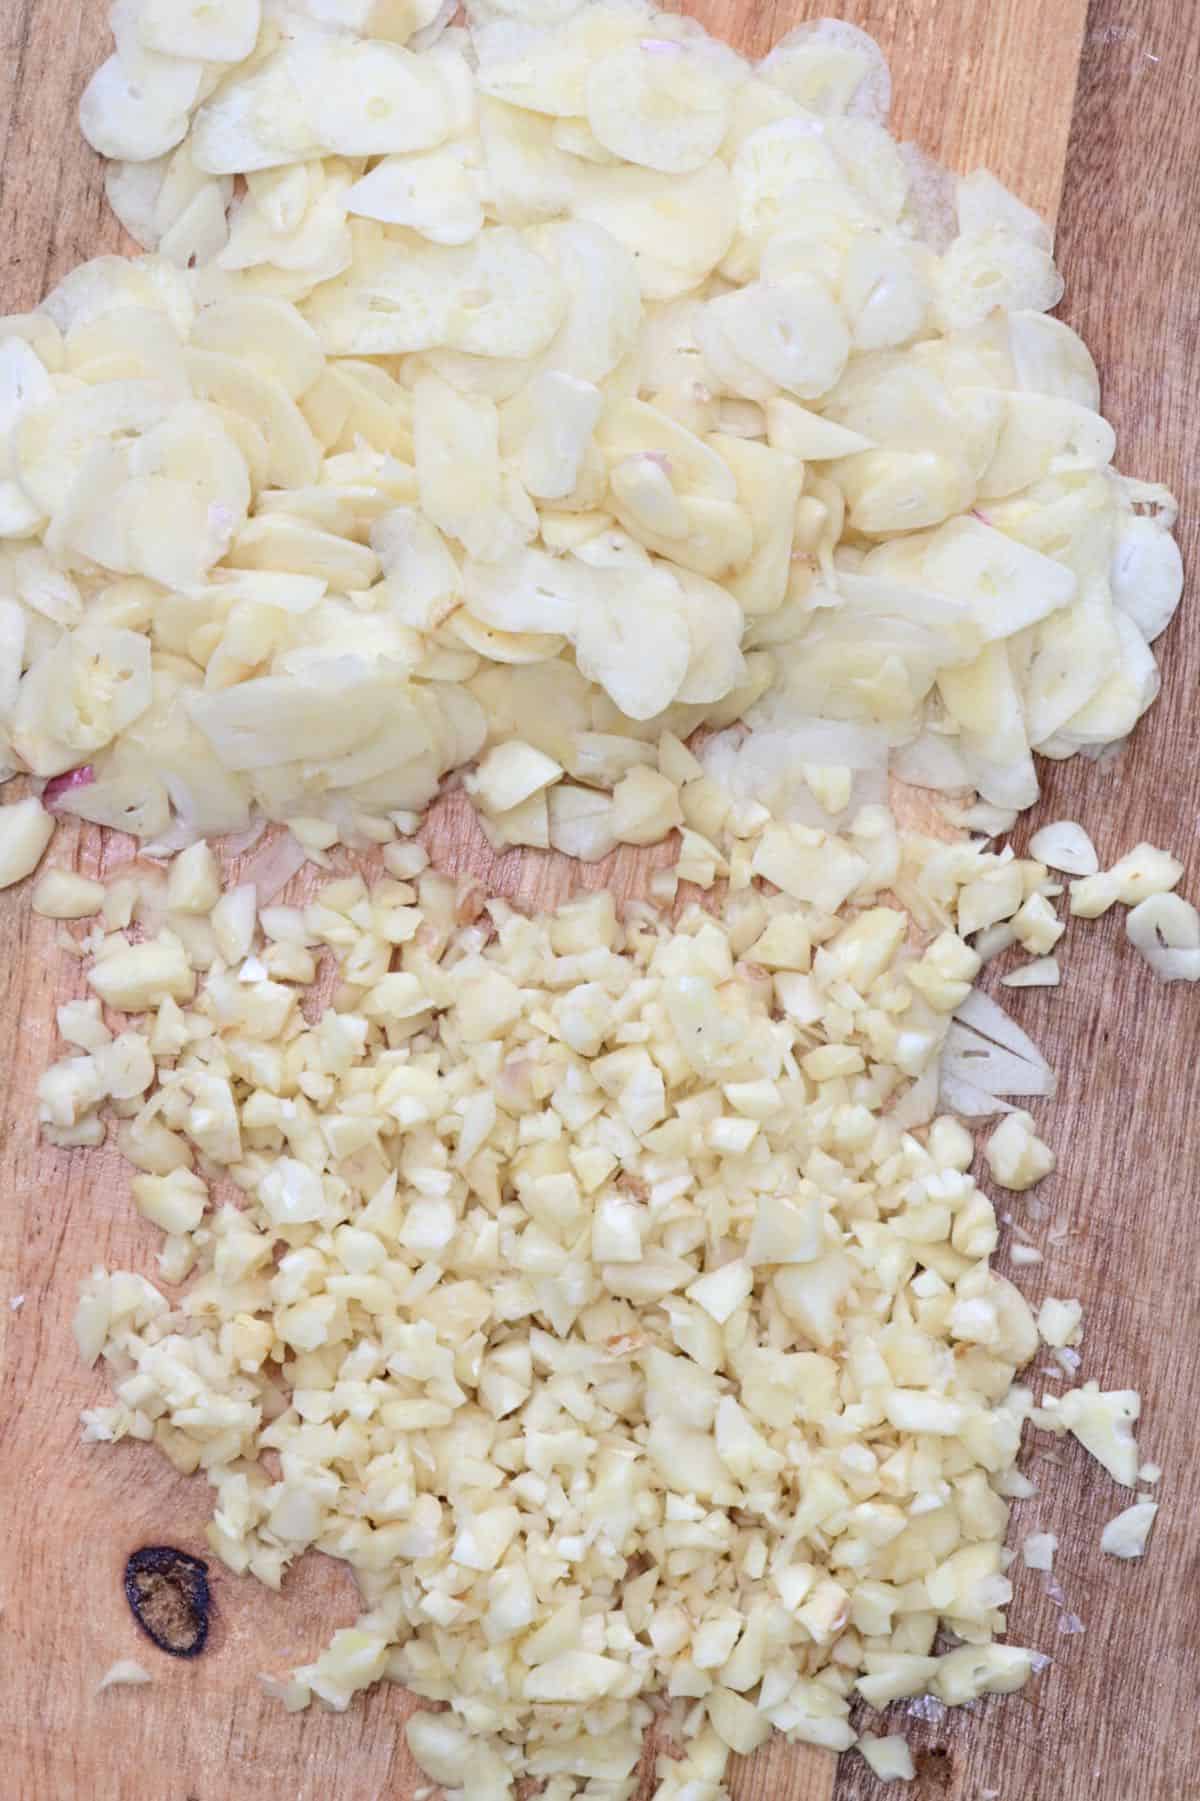 Minced garlic and garlic cut into thin slices